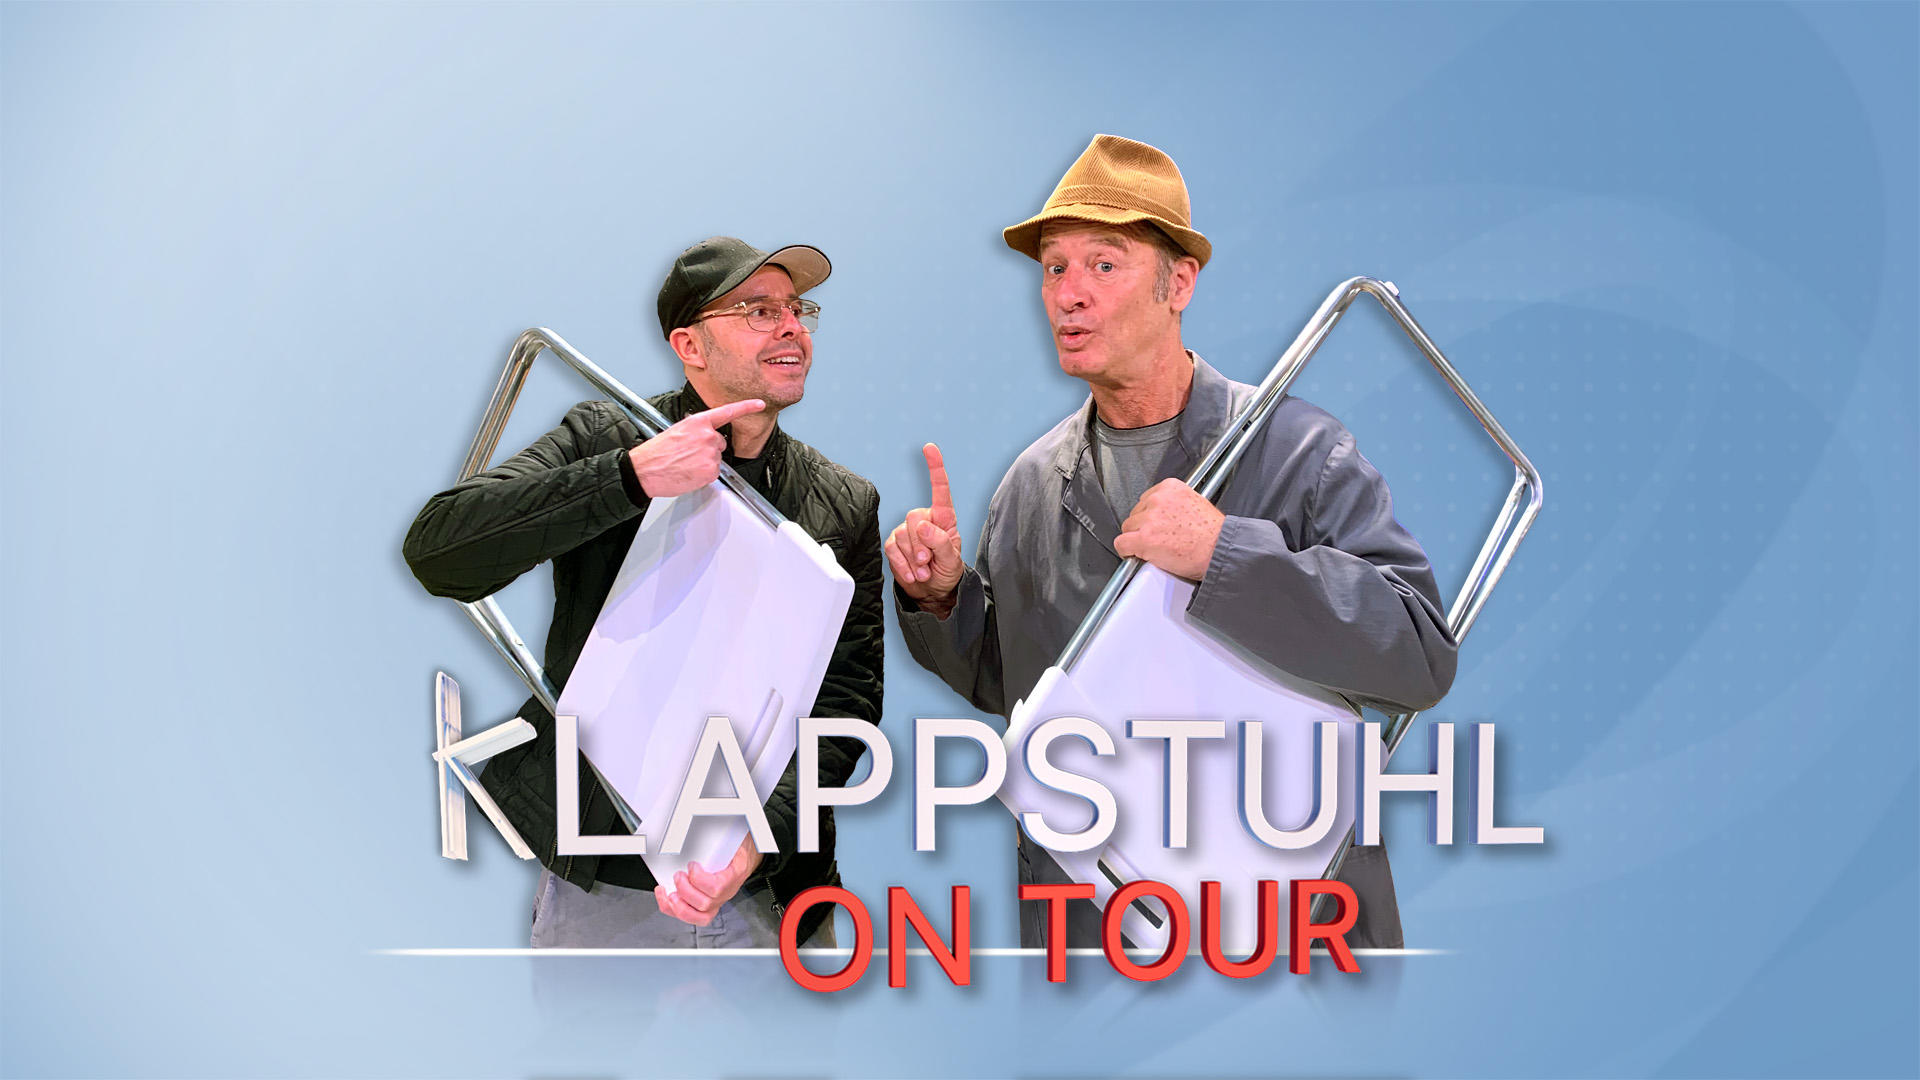 Till Quitmann trifft "Hausmeister Krause" Klappstuhl on Tour